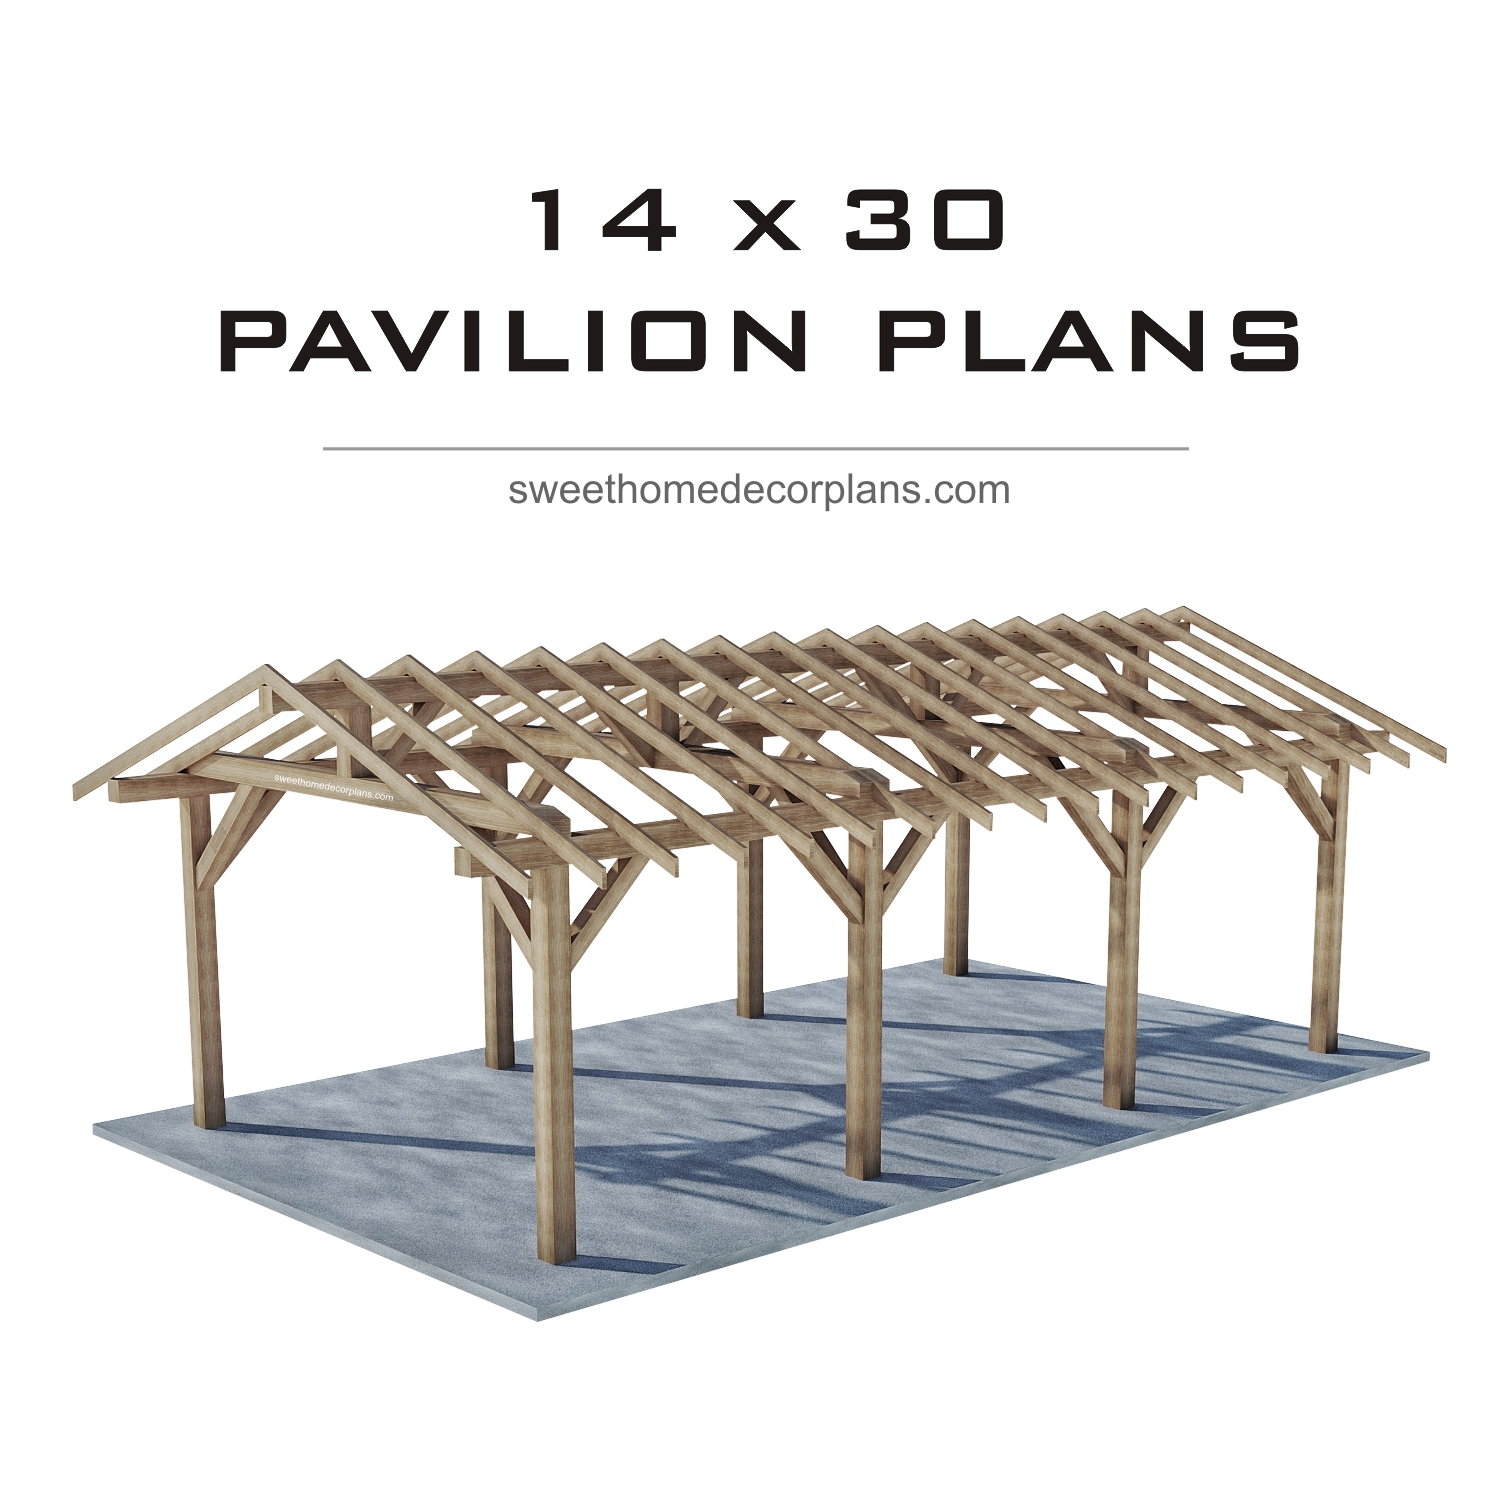 Diy-14-х-30-gable-pavilion-plans-carport-patio-pergola